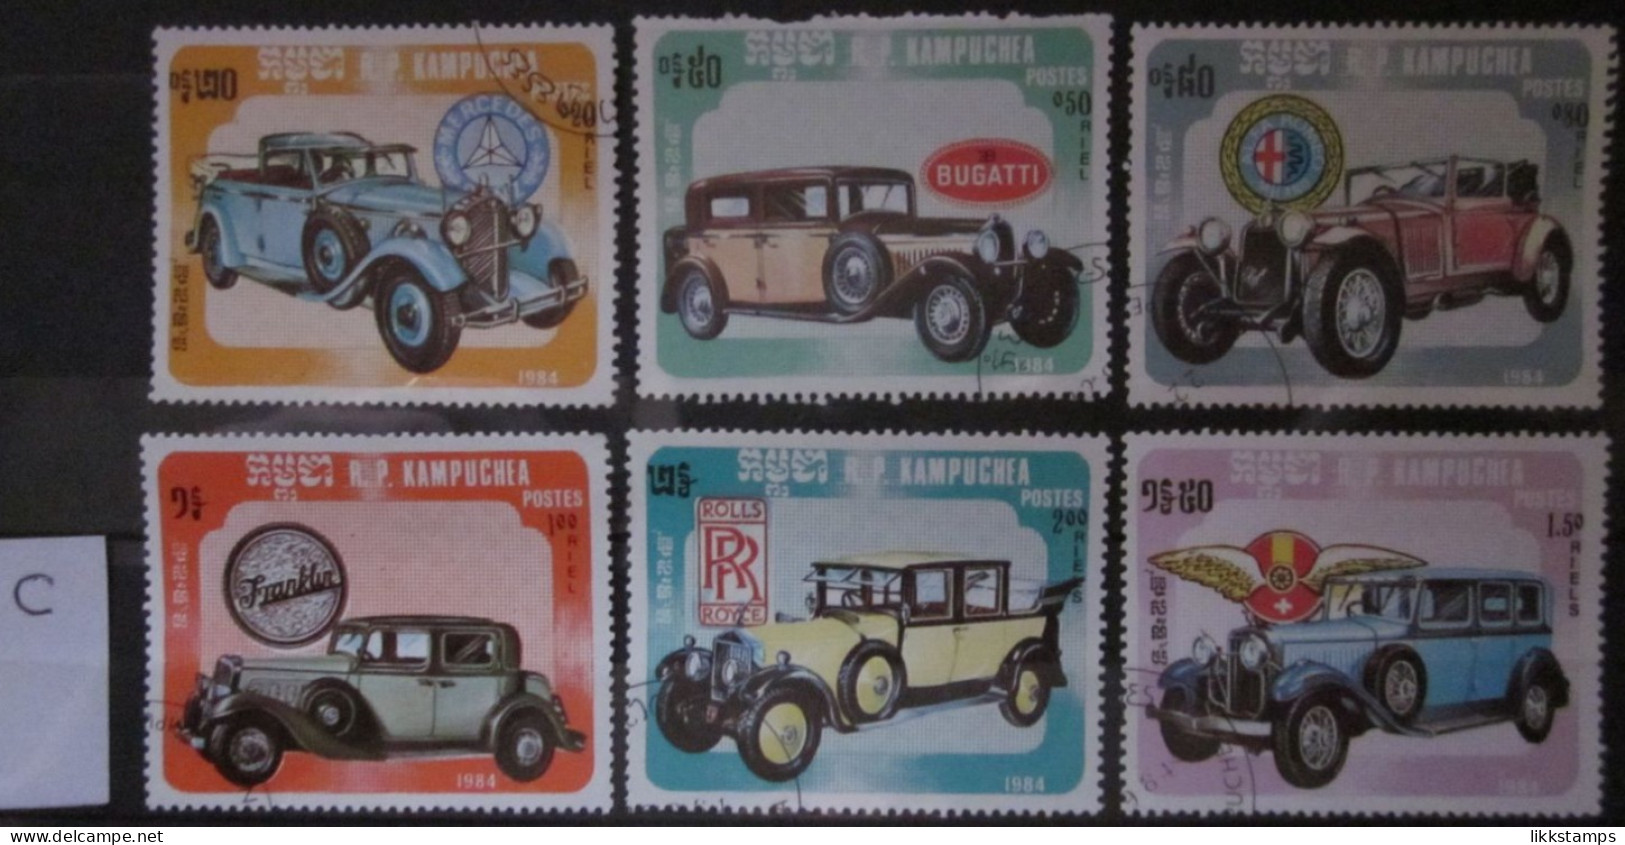 KAMPUCHEA 1984 ~ S.G. 556 - 561, ~ 'LOT C' ~ CARS. ~ VFU #03336 - Kampuchea